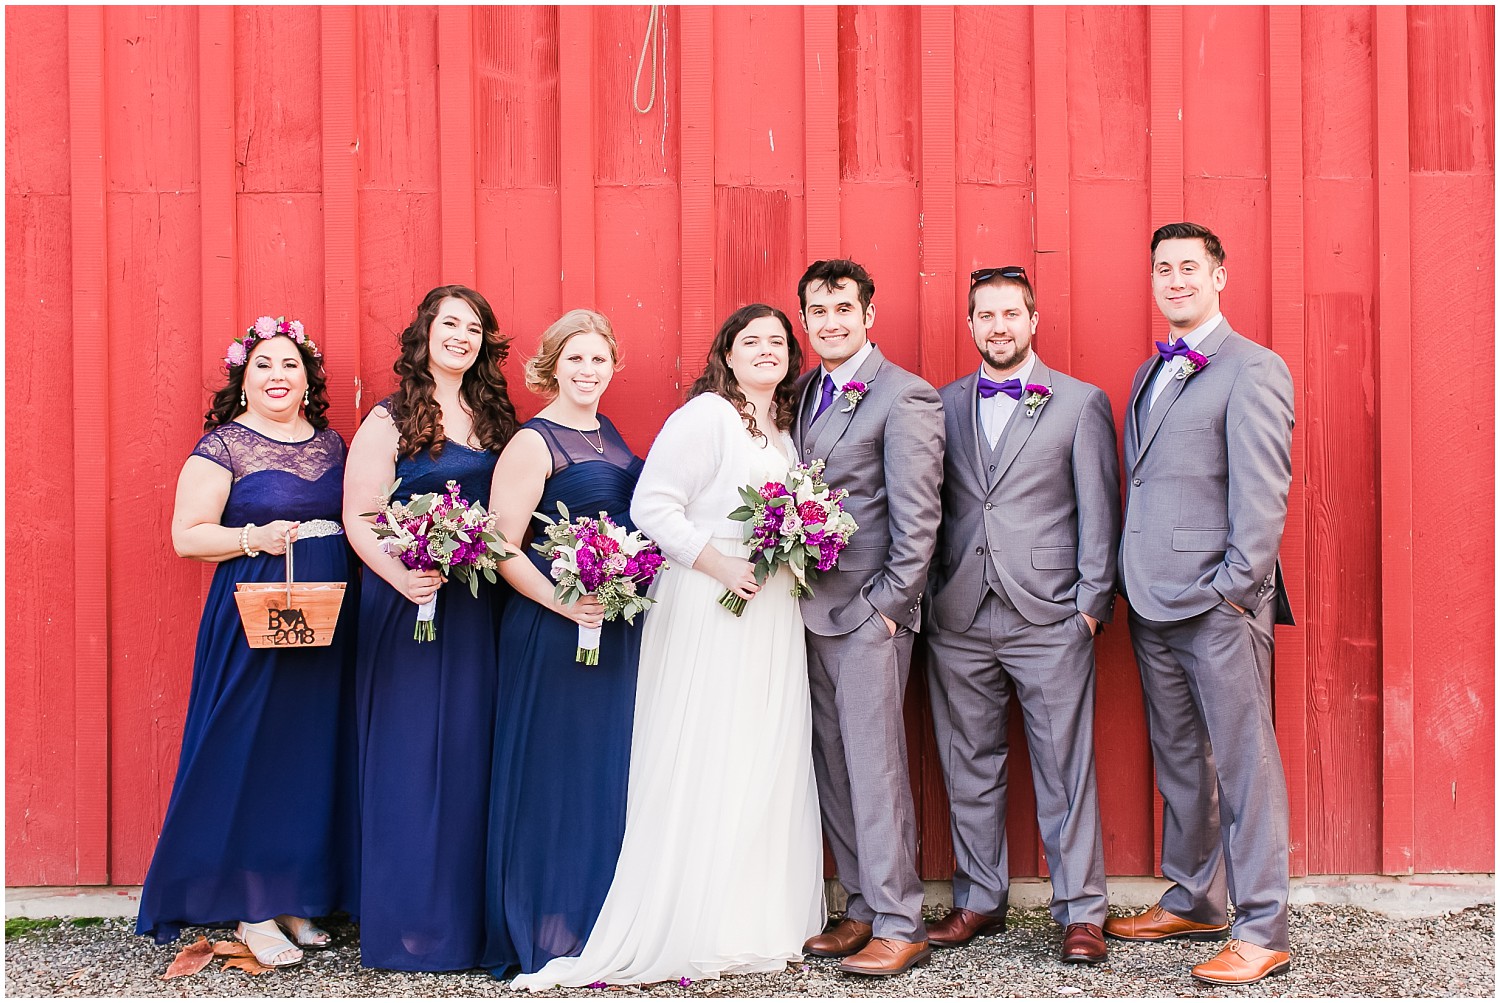 Pickering Barn Wedding | Bryan & Angela